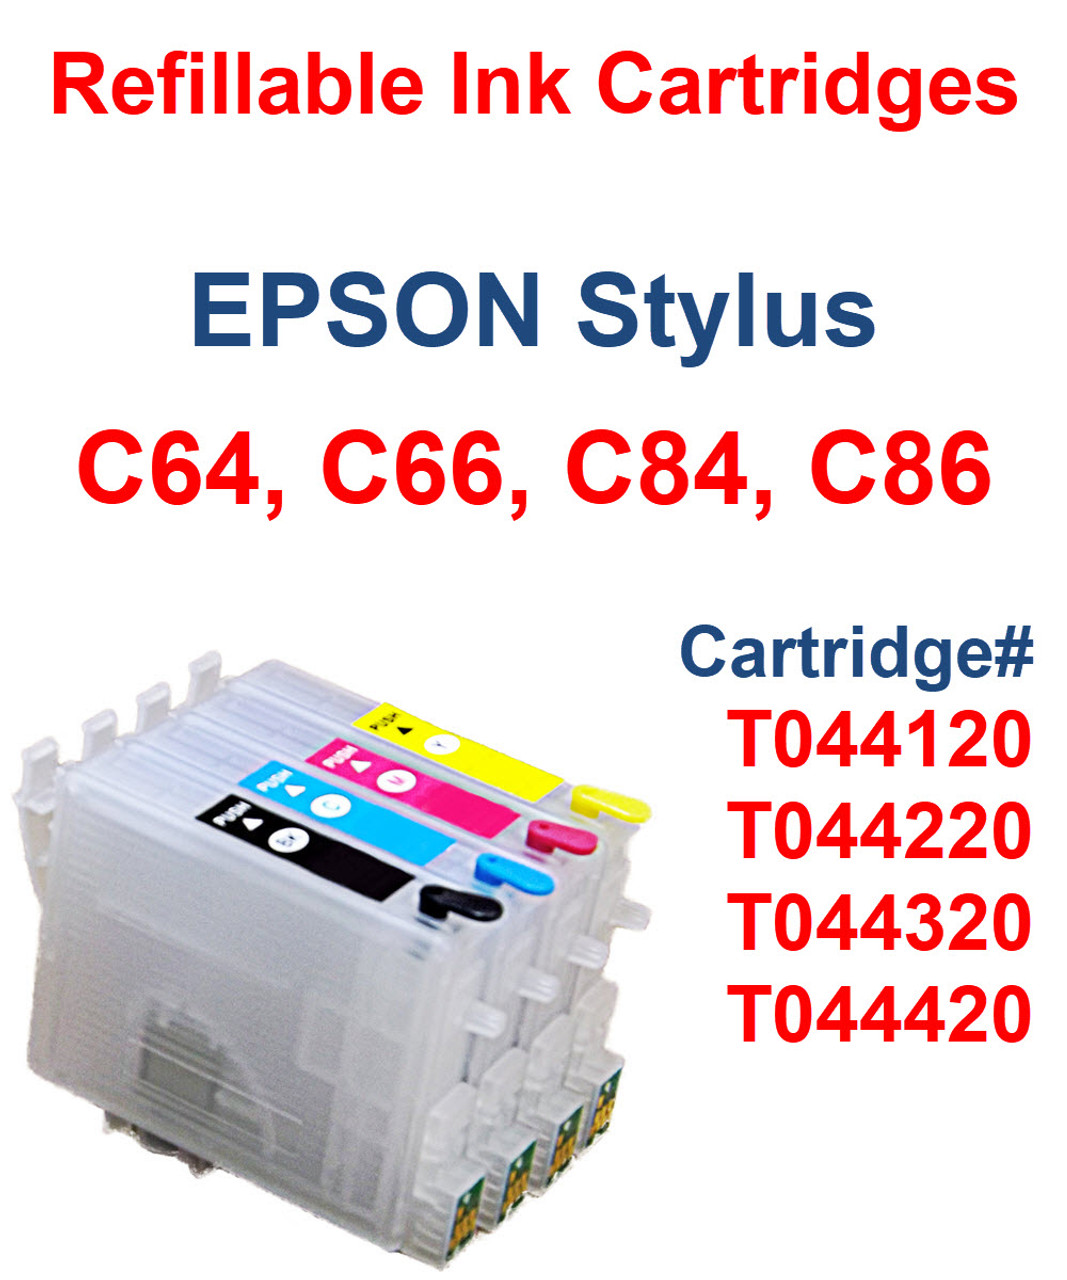 4- Refillable Ink Cartridges for Epson Stylus C64 C66 C84 C86 printers